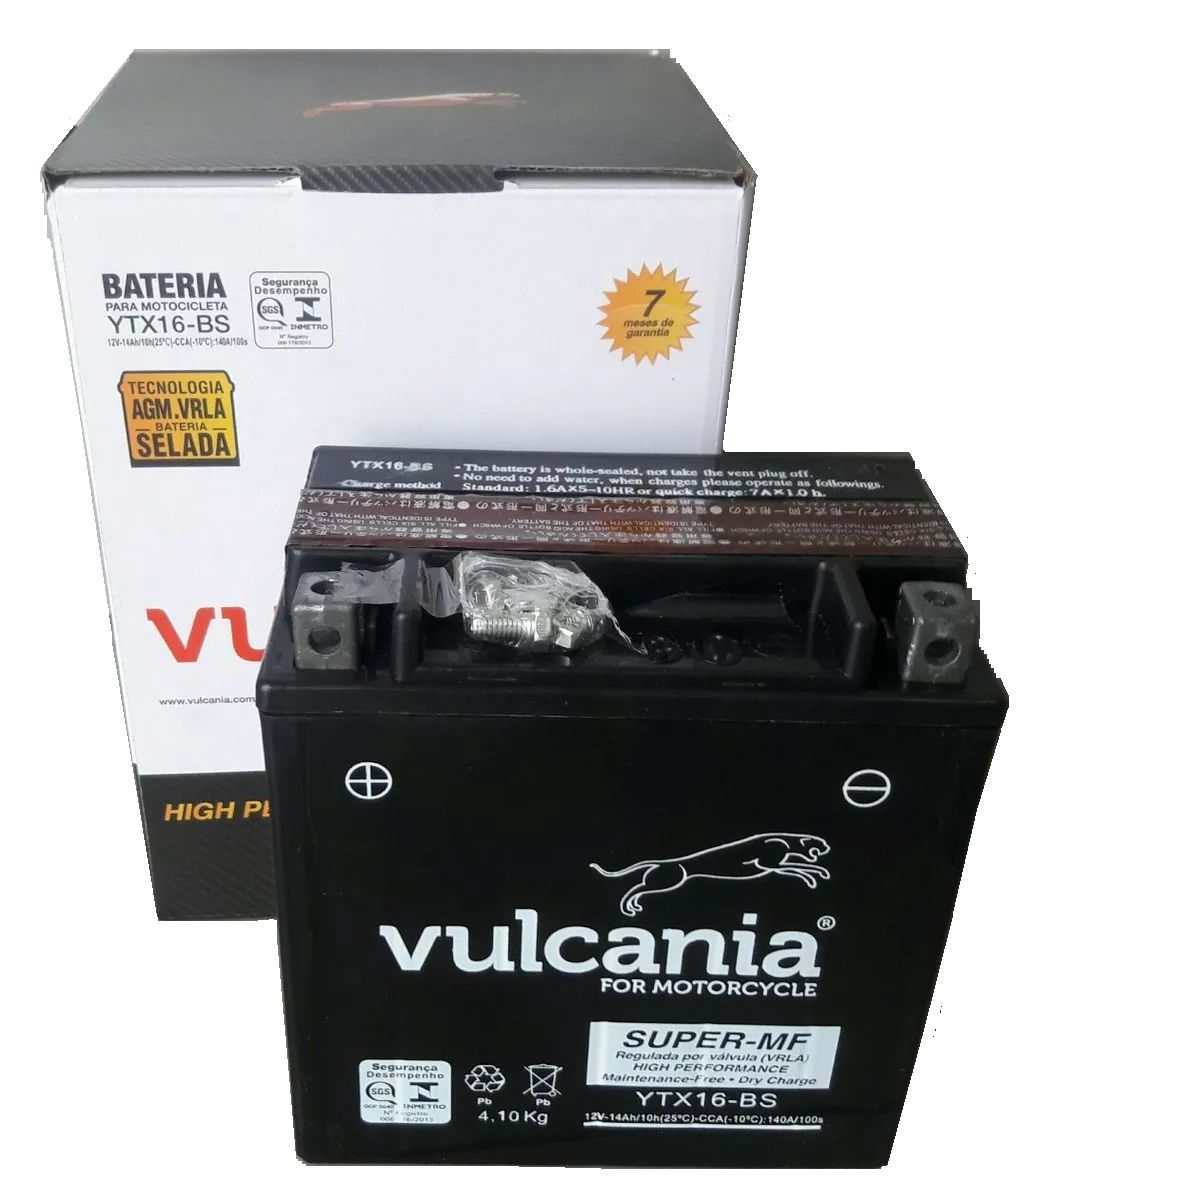 Bateria Vulcania YTX16-BS. Condiçoes Imperdíveis - Bateria Yuasa